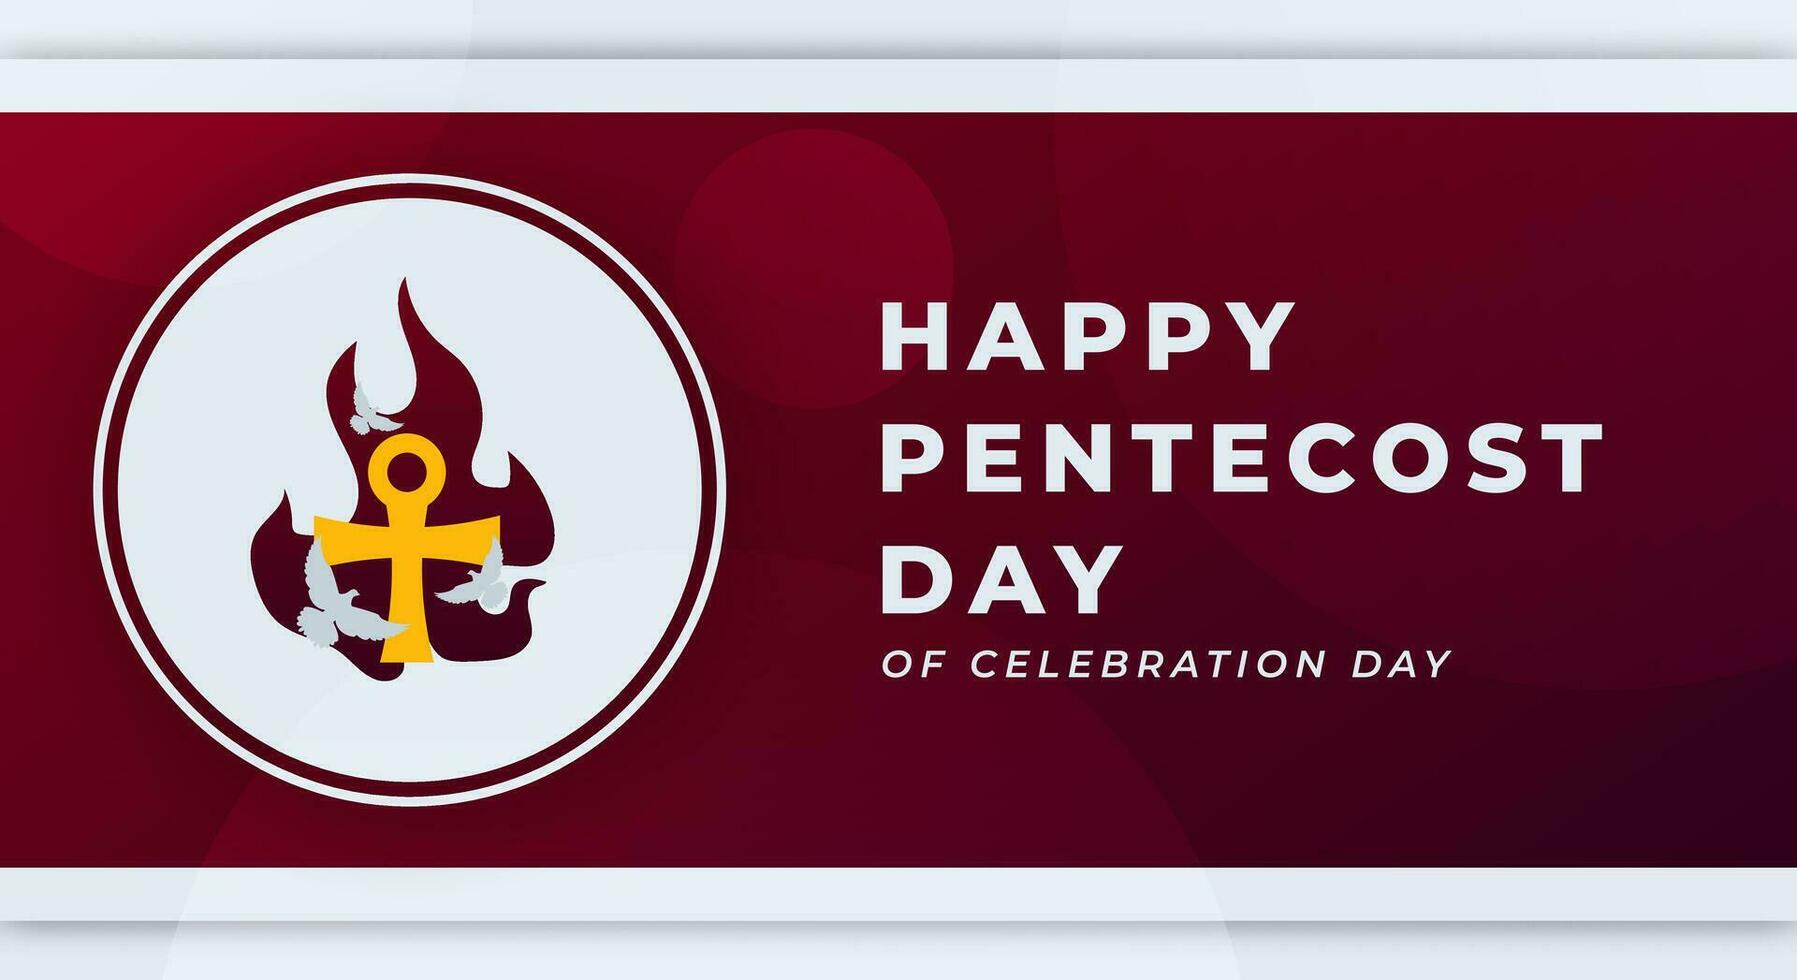 Happy Pentecost Day Celebration Vector Design Illustration for Background, Poster, Banner, Advertising, Greeting Card